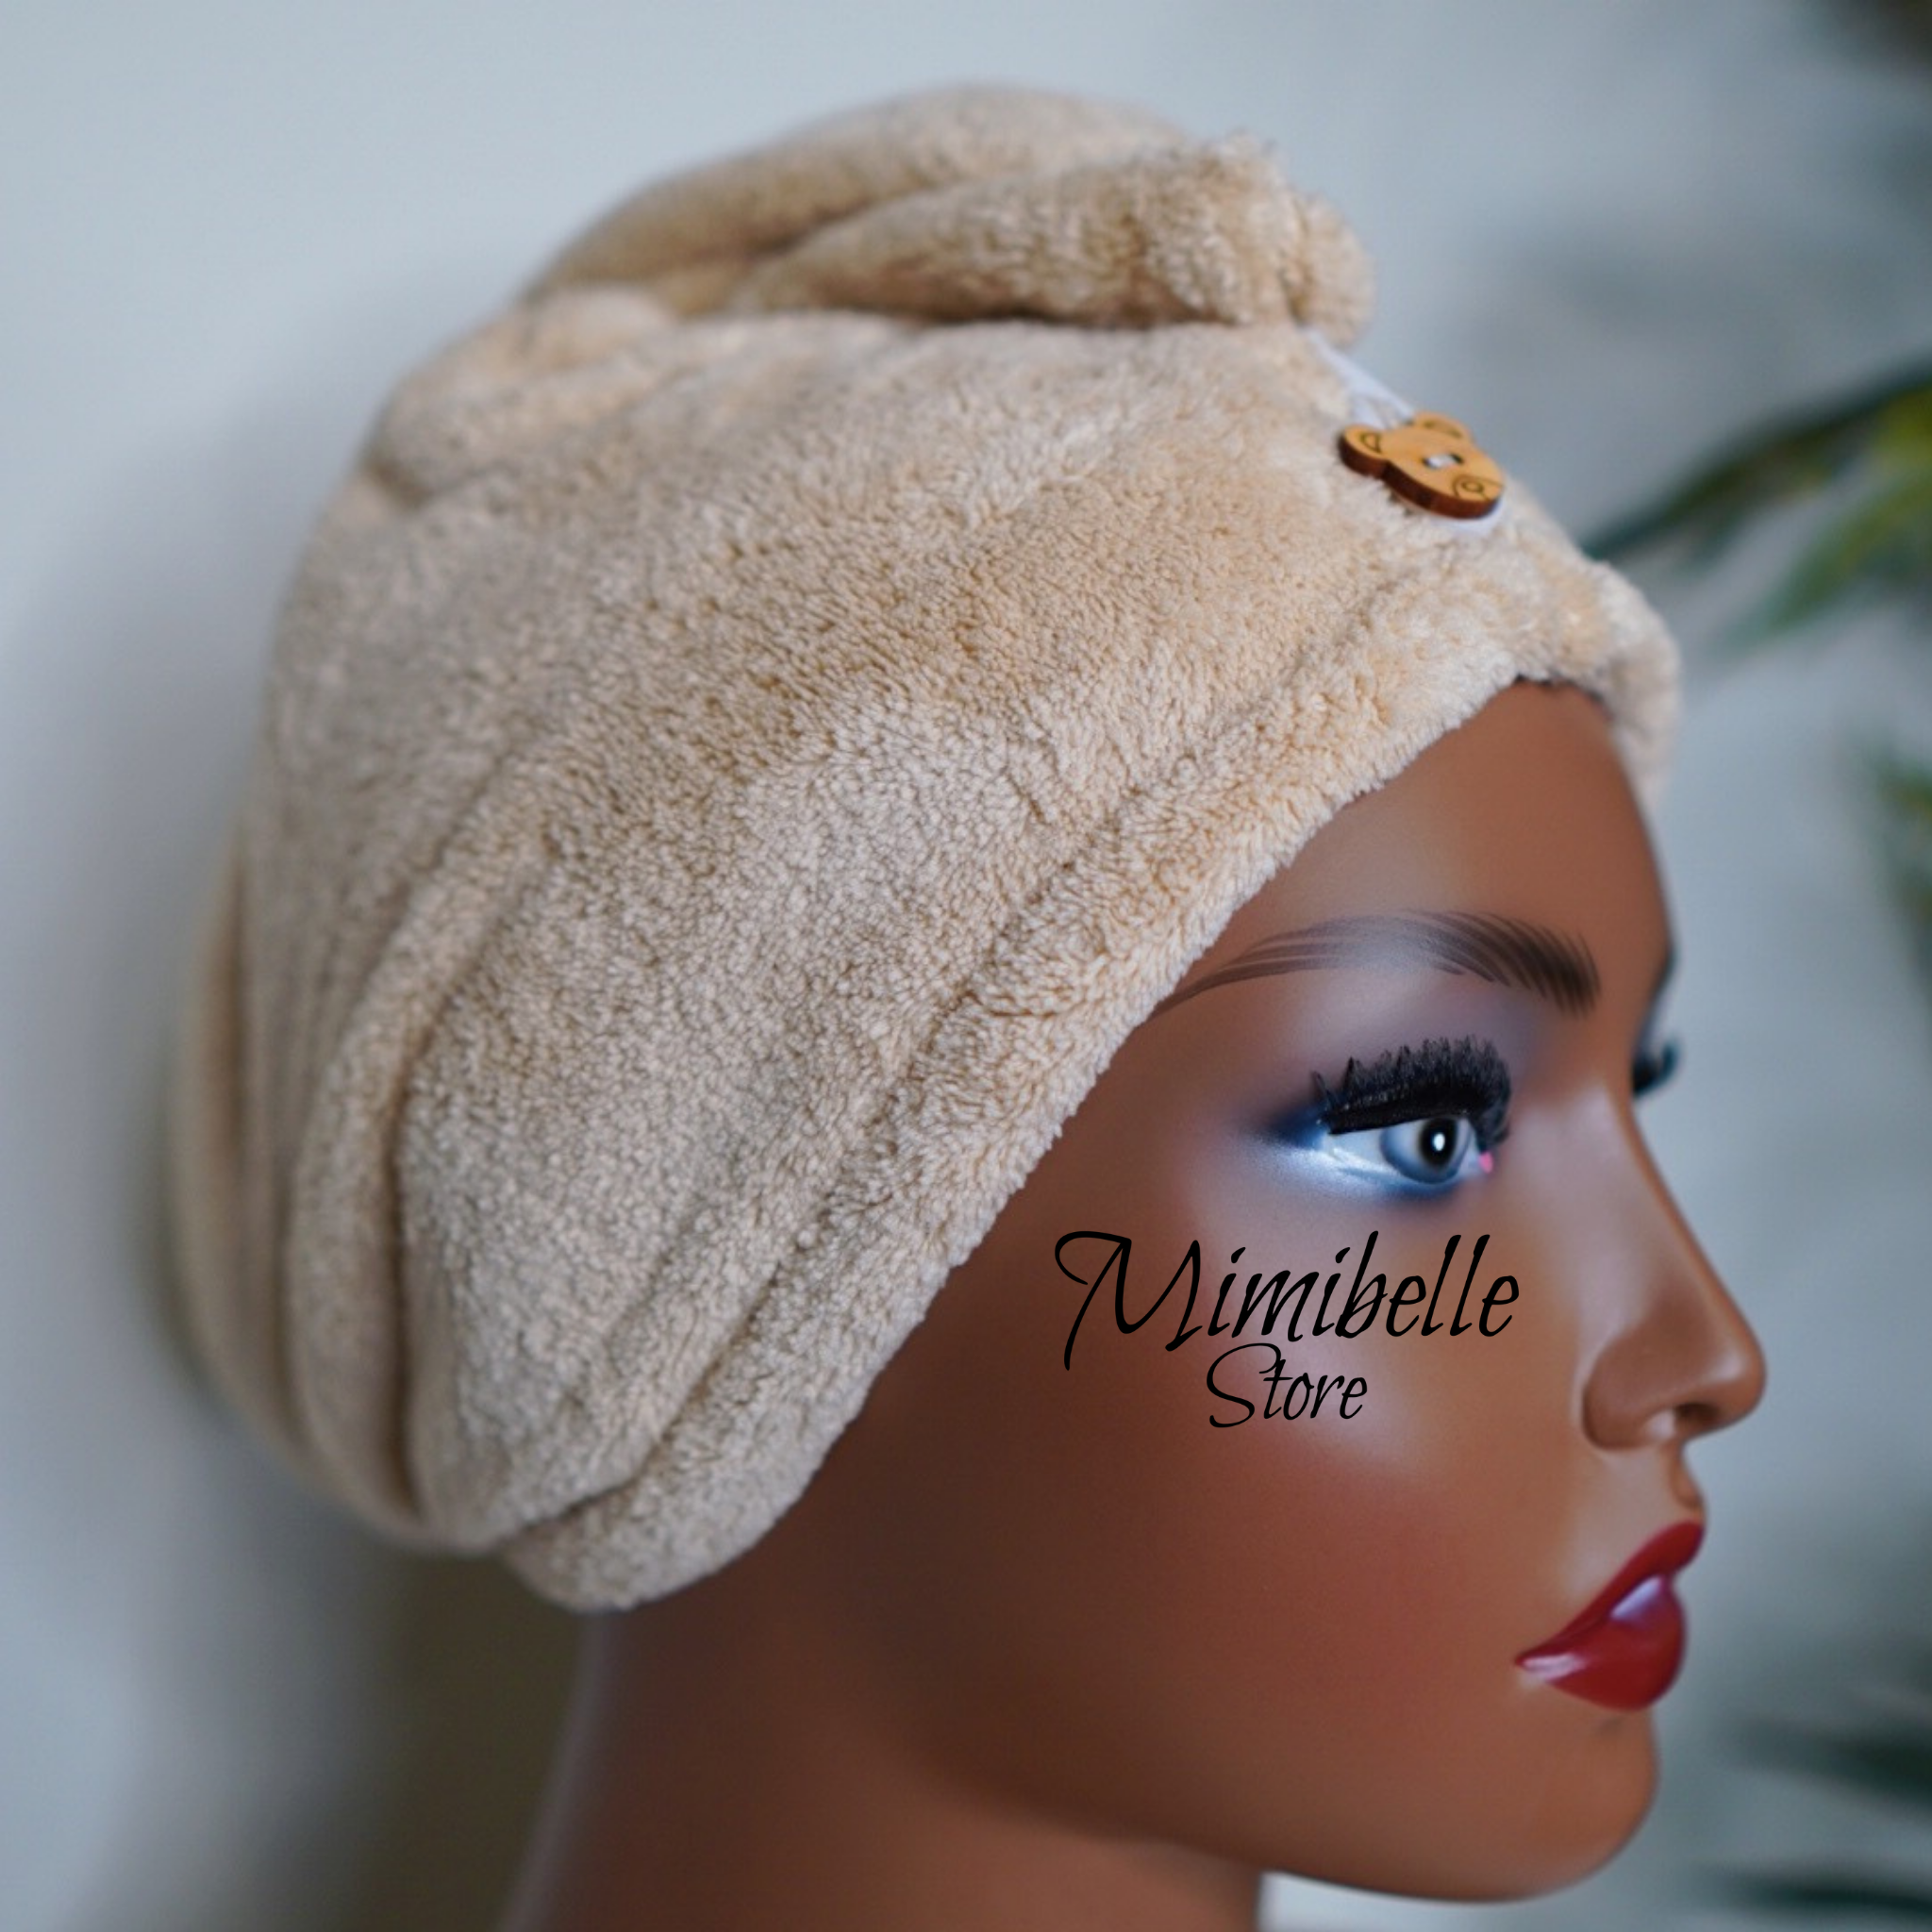 MICROFIBER DOUBLE LAYER HAIR TOWEL BY MIMIBELLESTORE